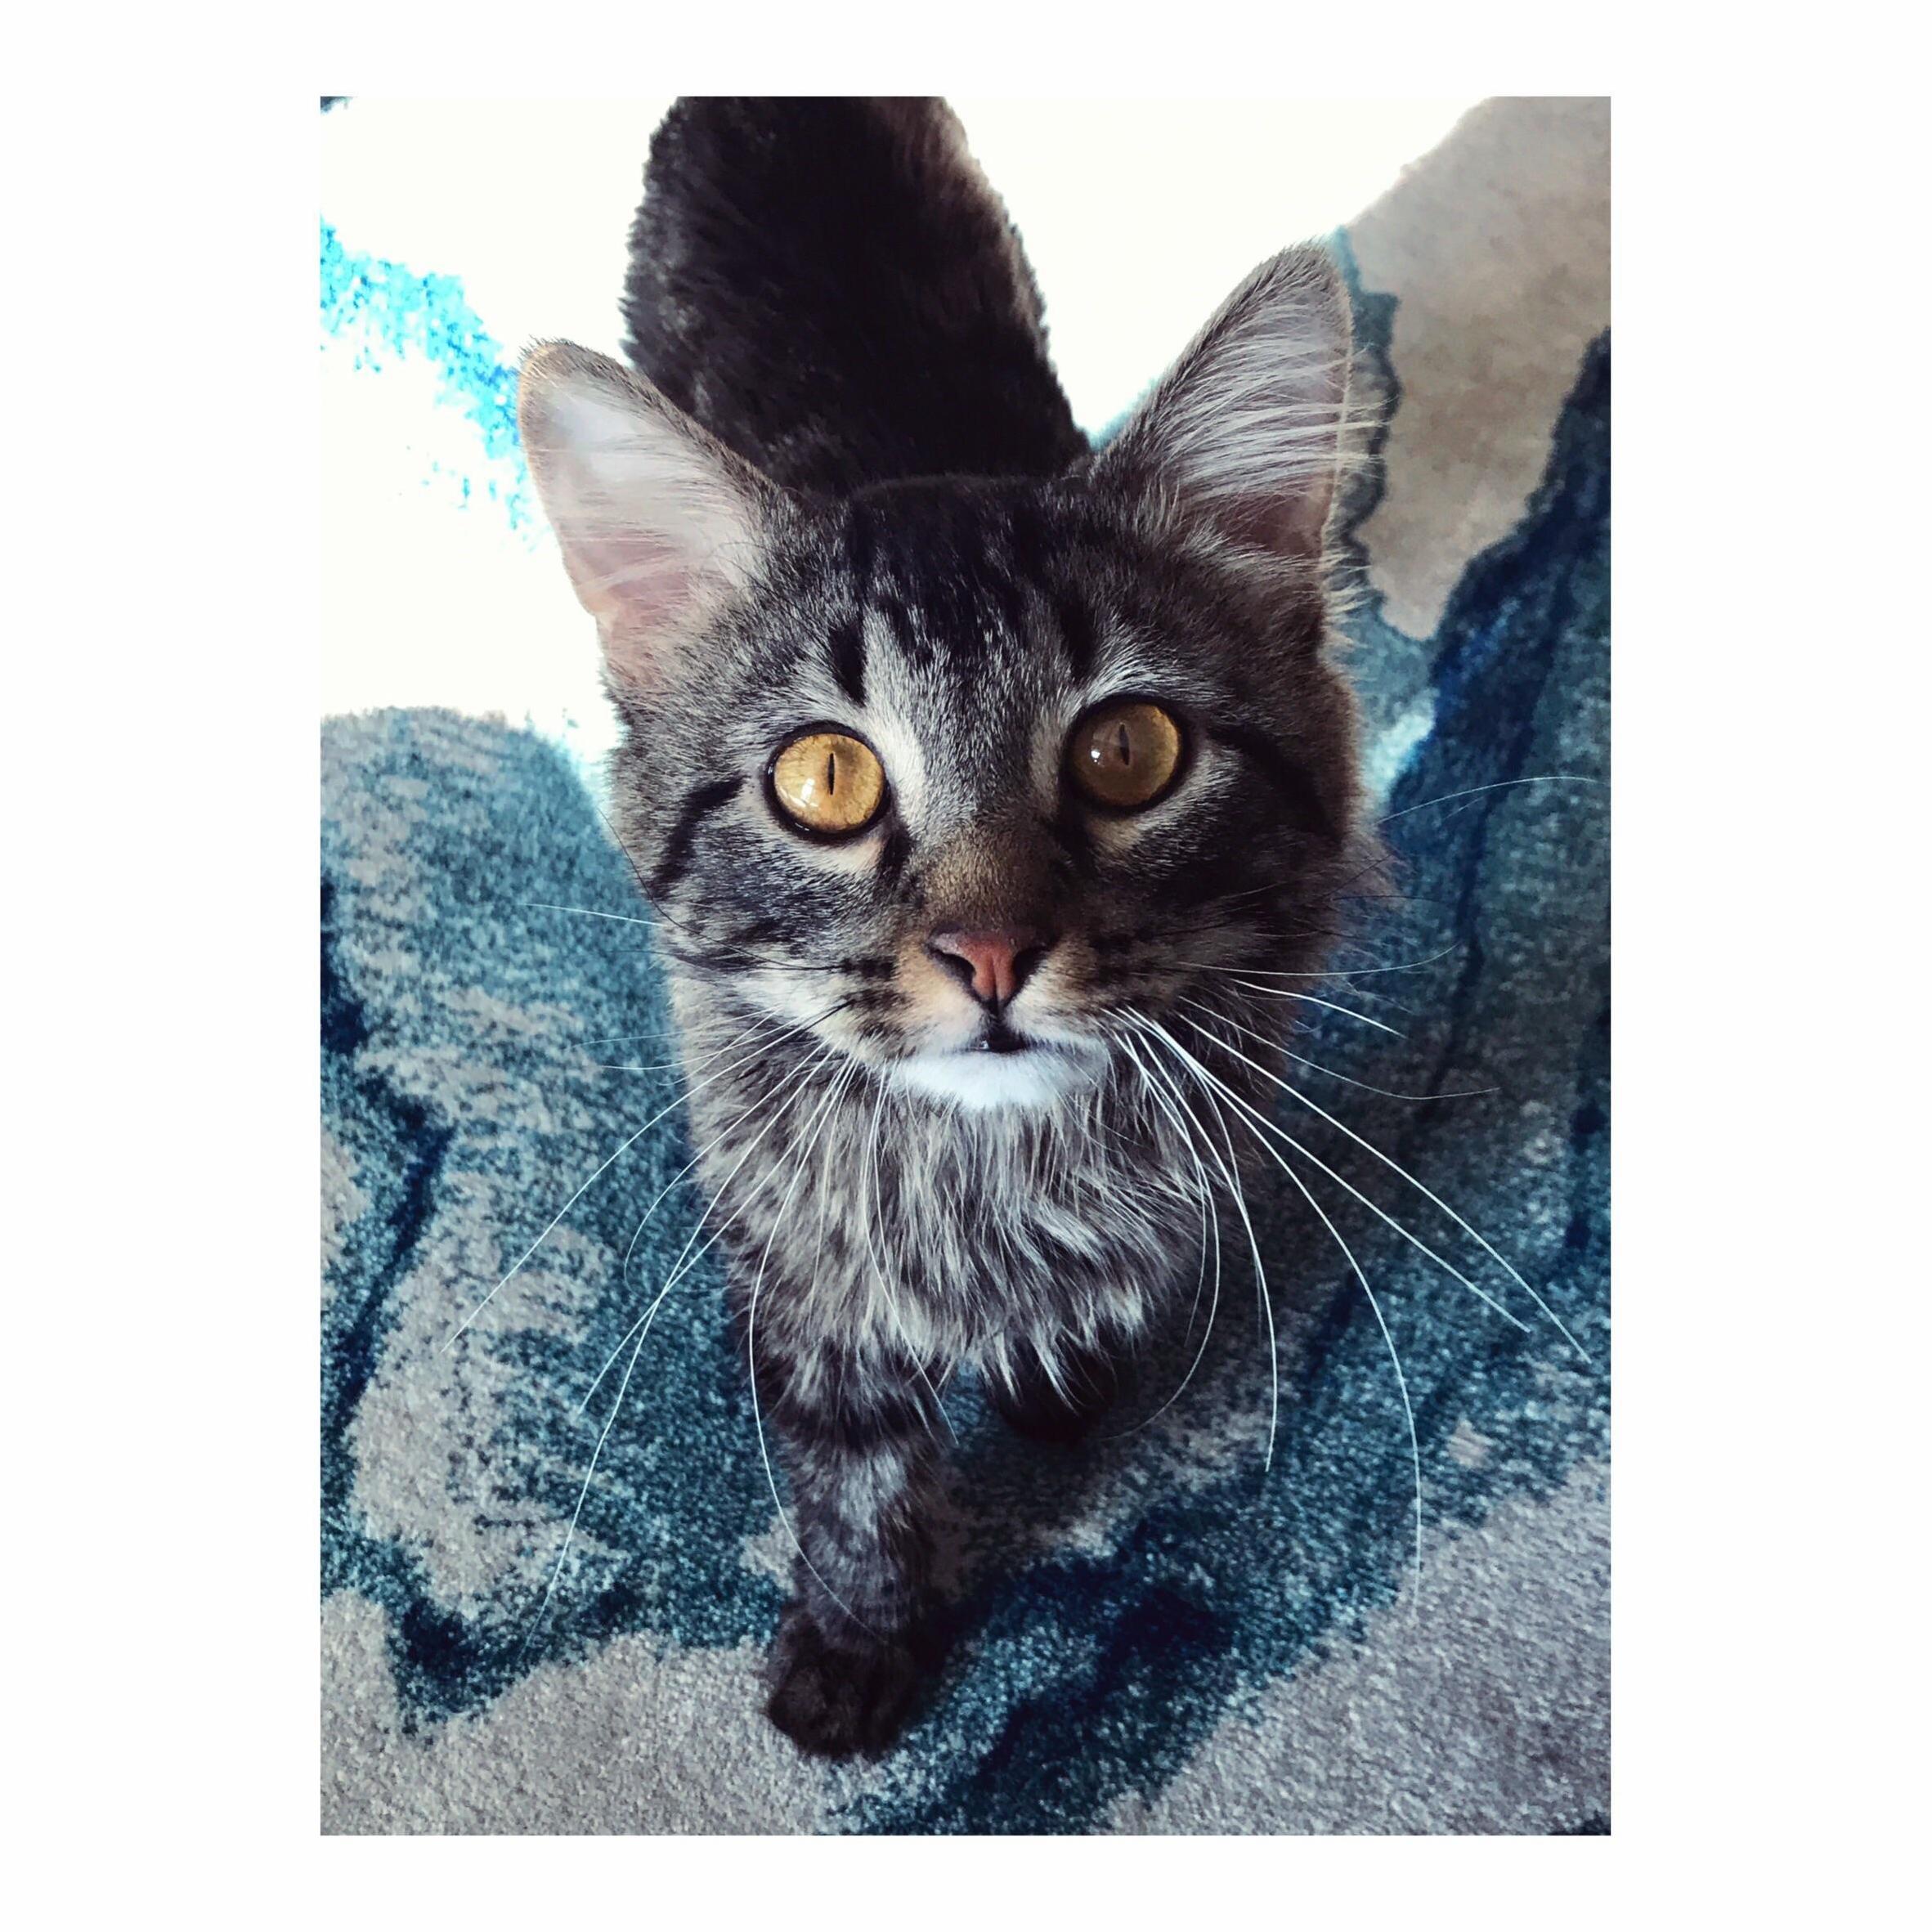 Adopted this handsome fellow a week ago… meet bastian.